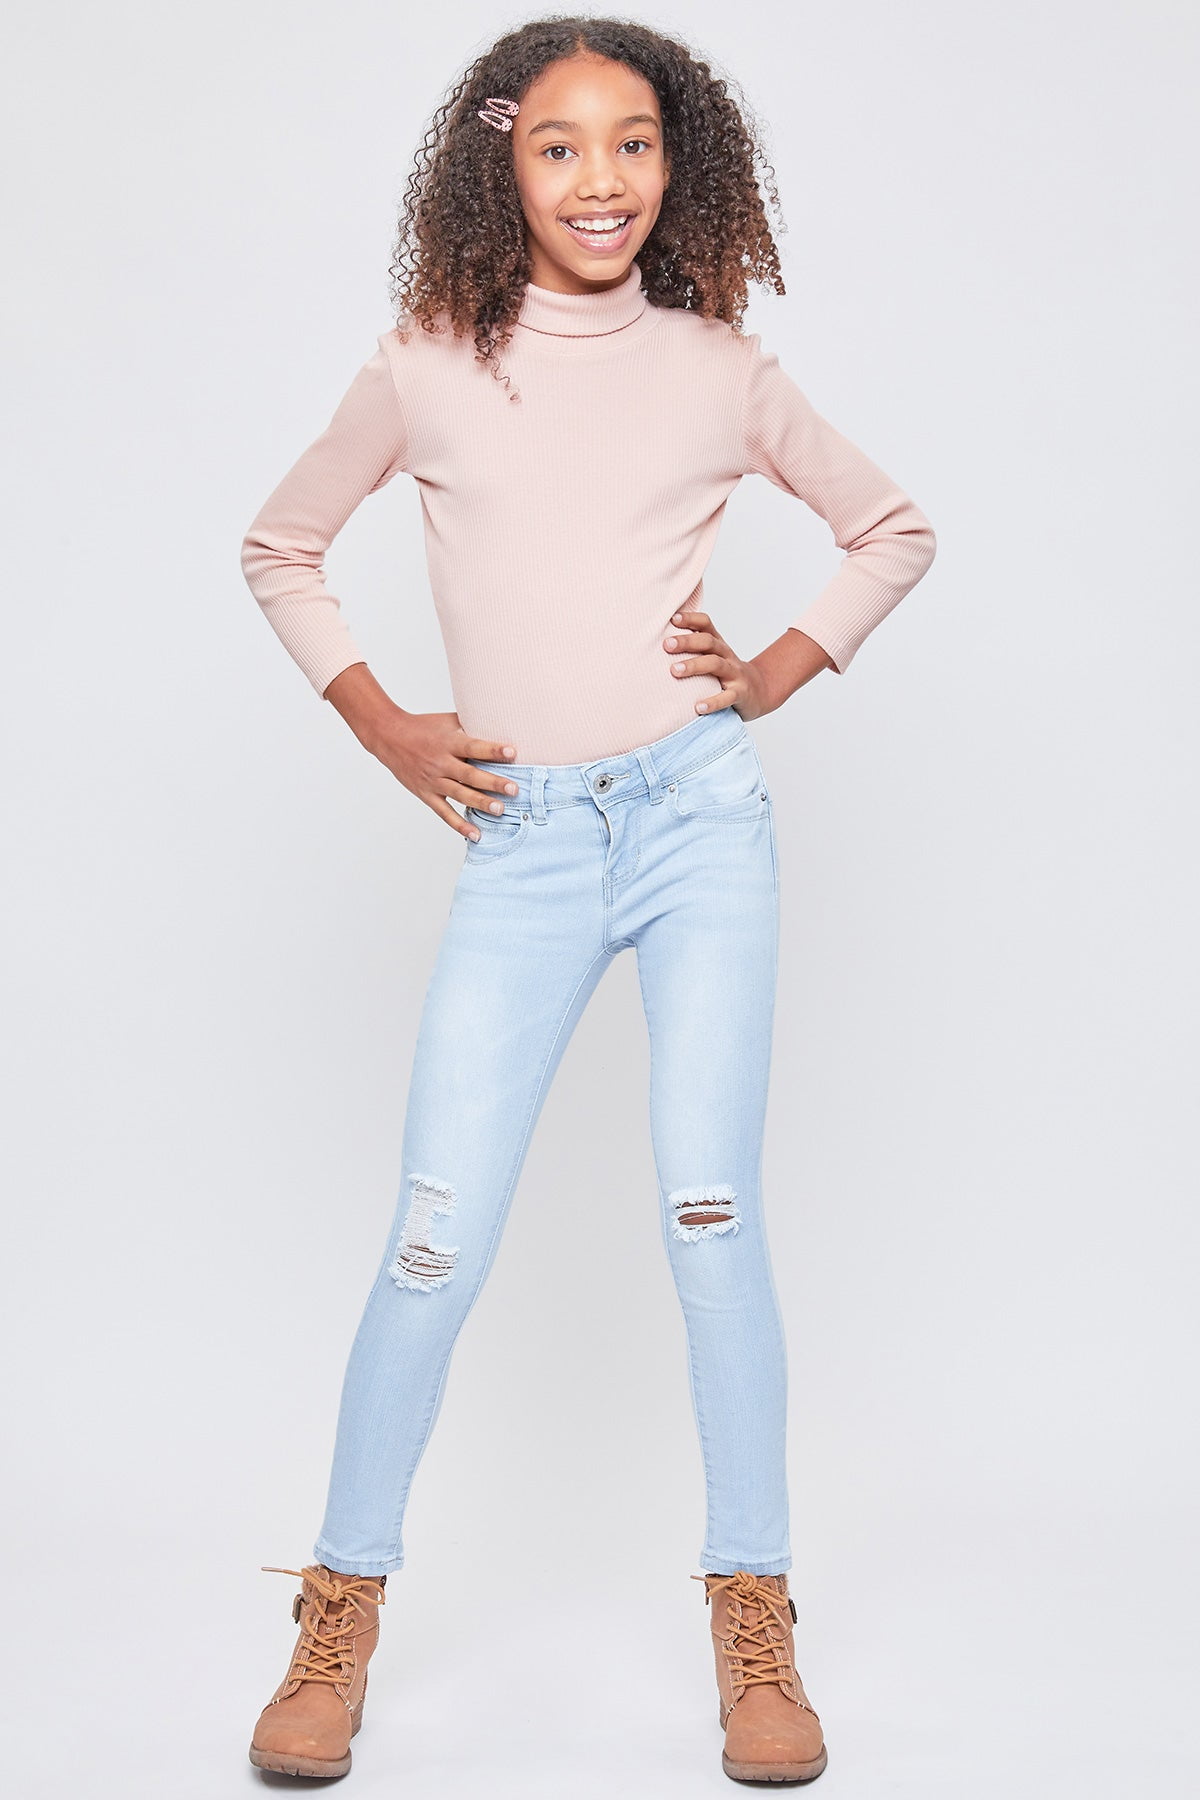 Girls WannaBettaFit Bootcut Jeans from YMI GIRLS – YMI JEANS